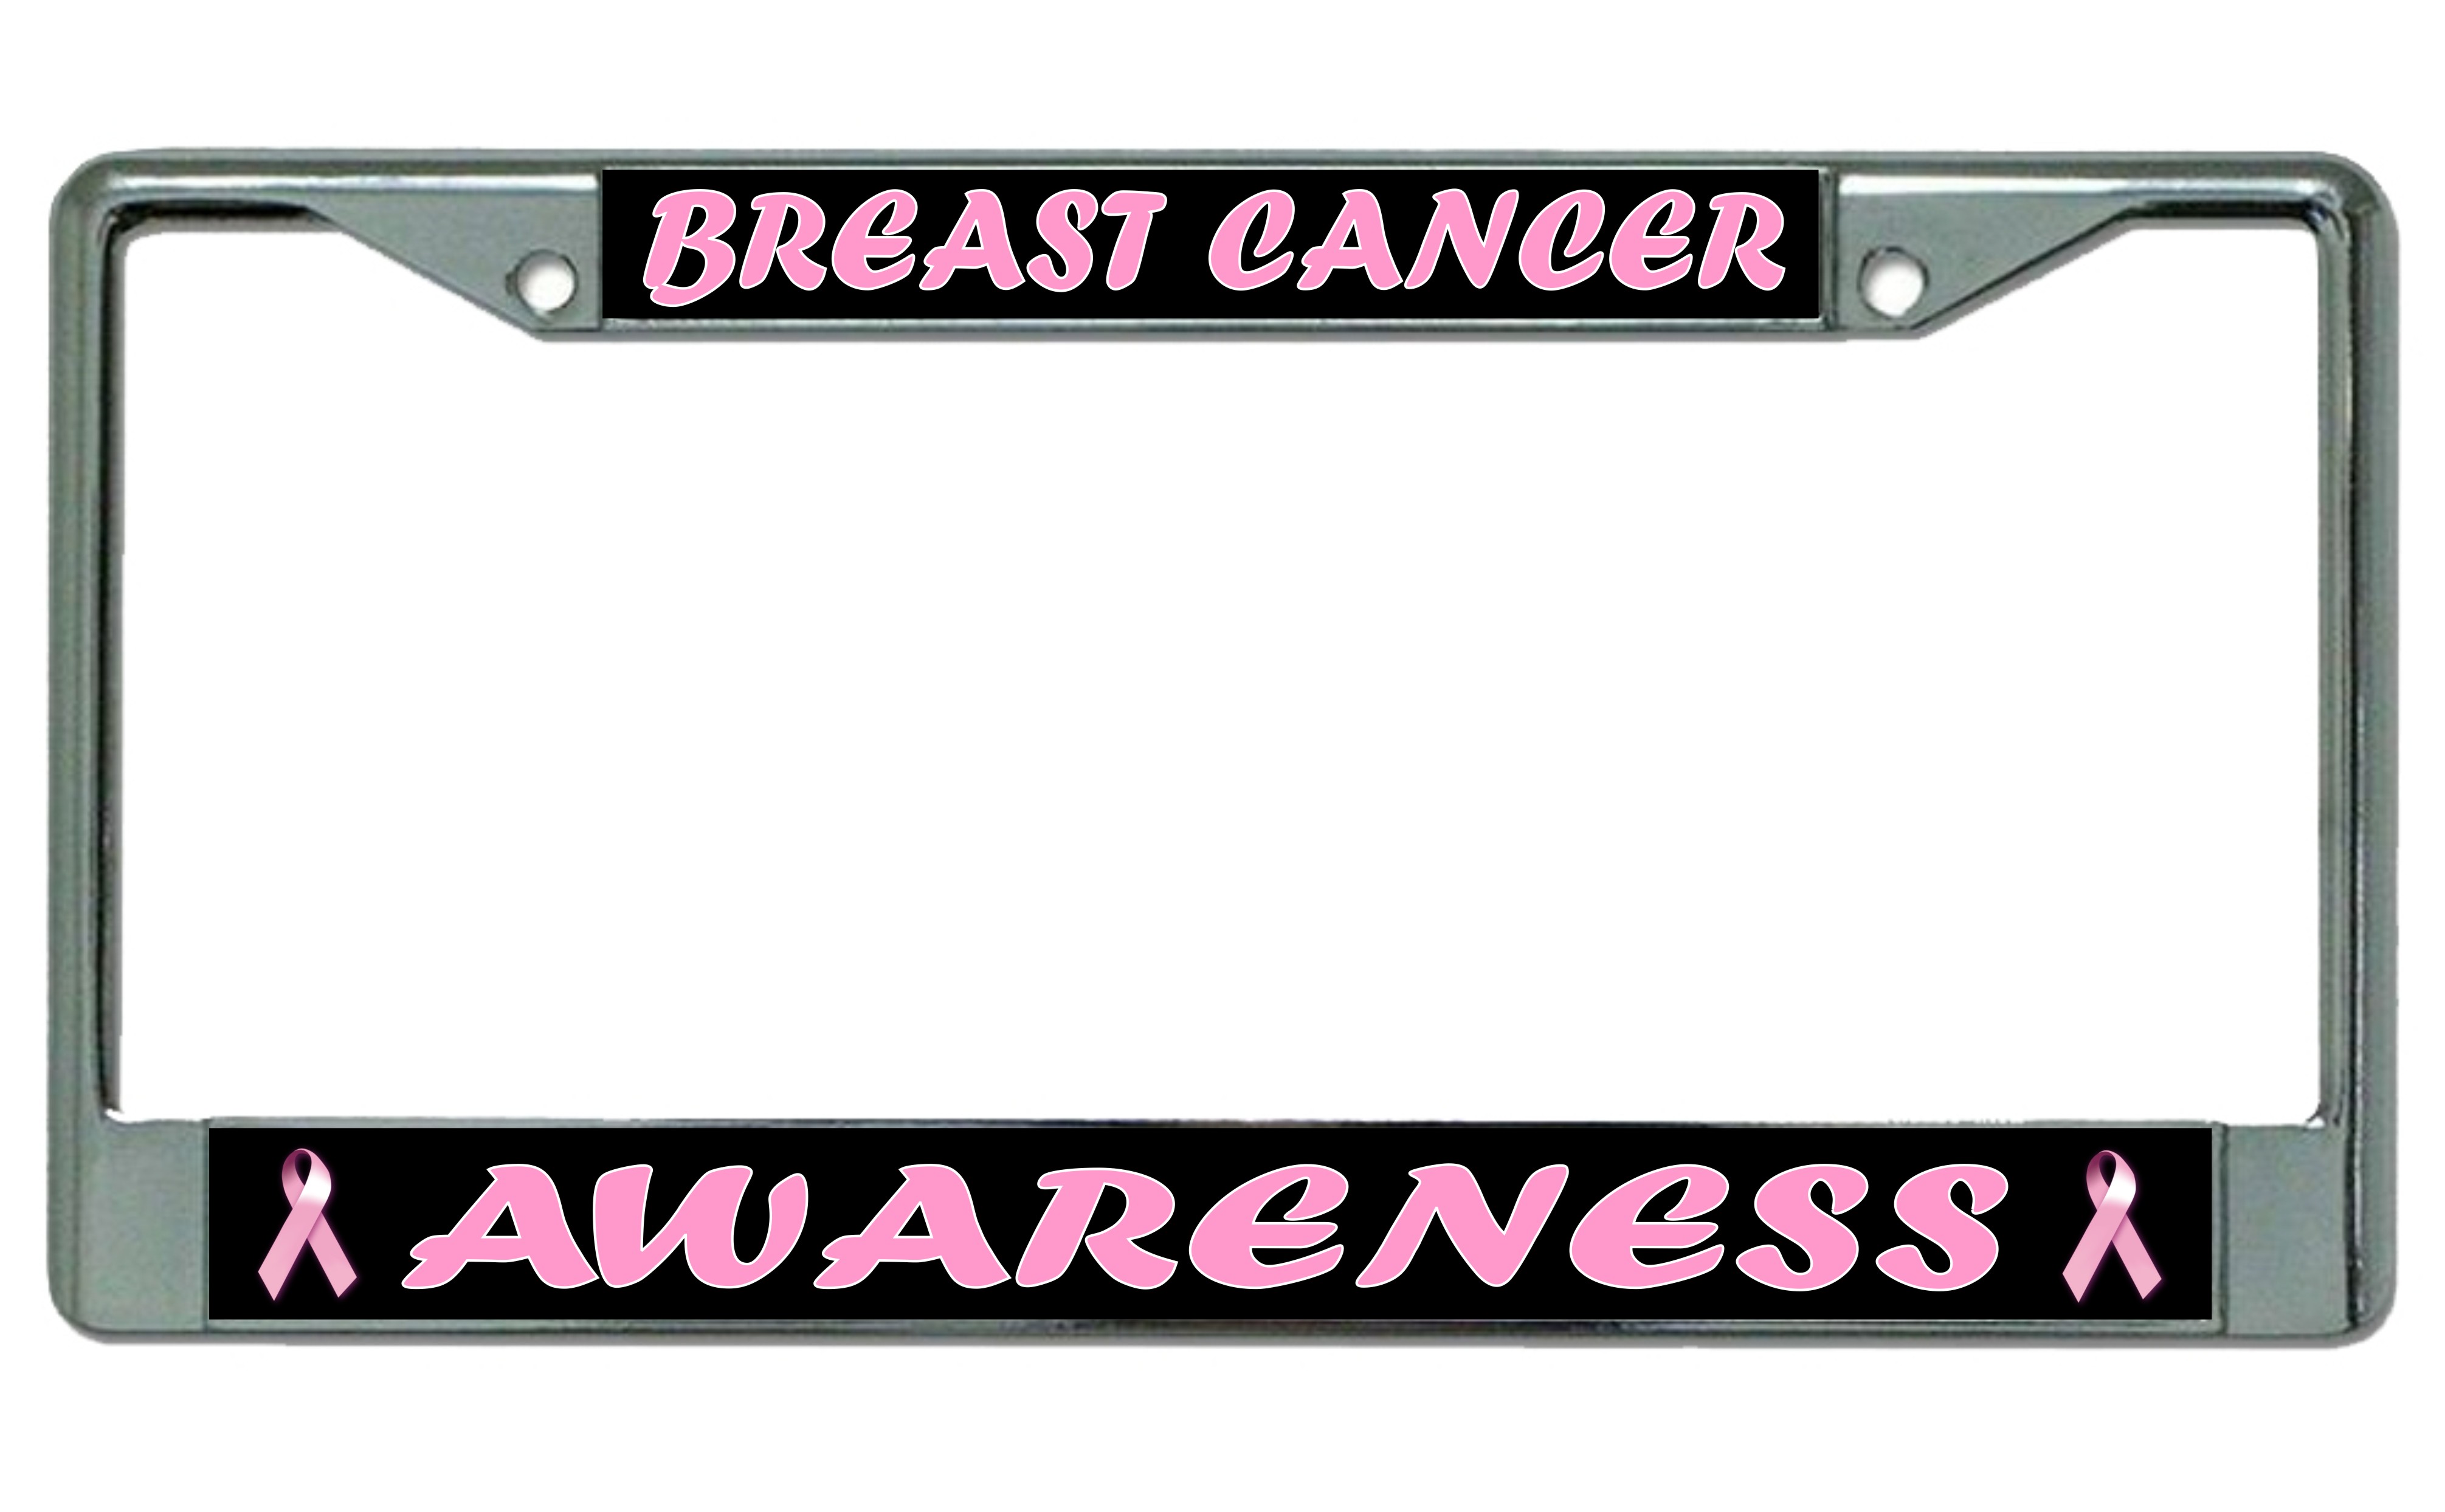 license-plates-online-breast-cancer-awareness-photo-license-plate-frame